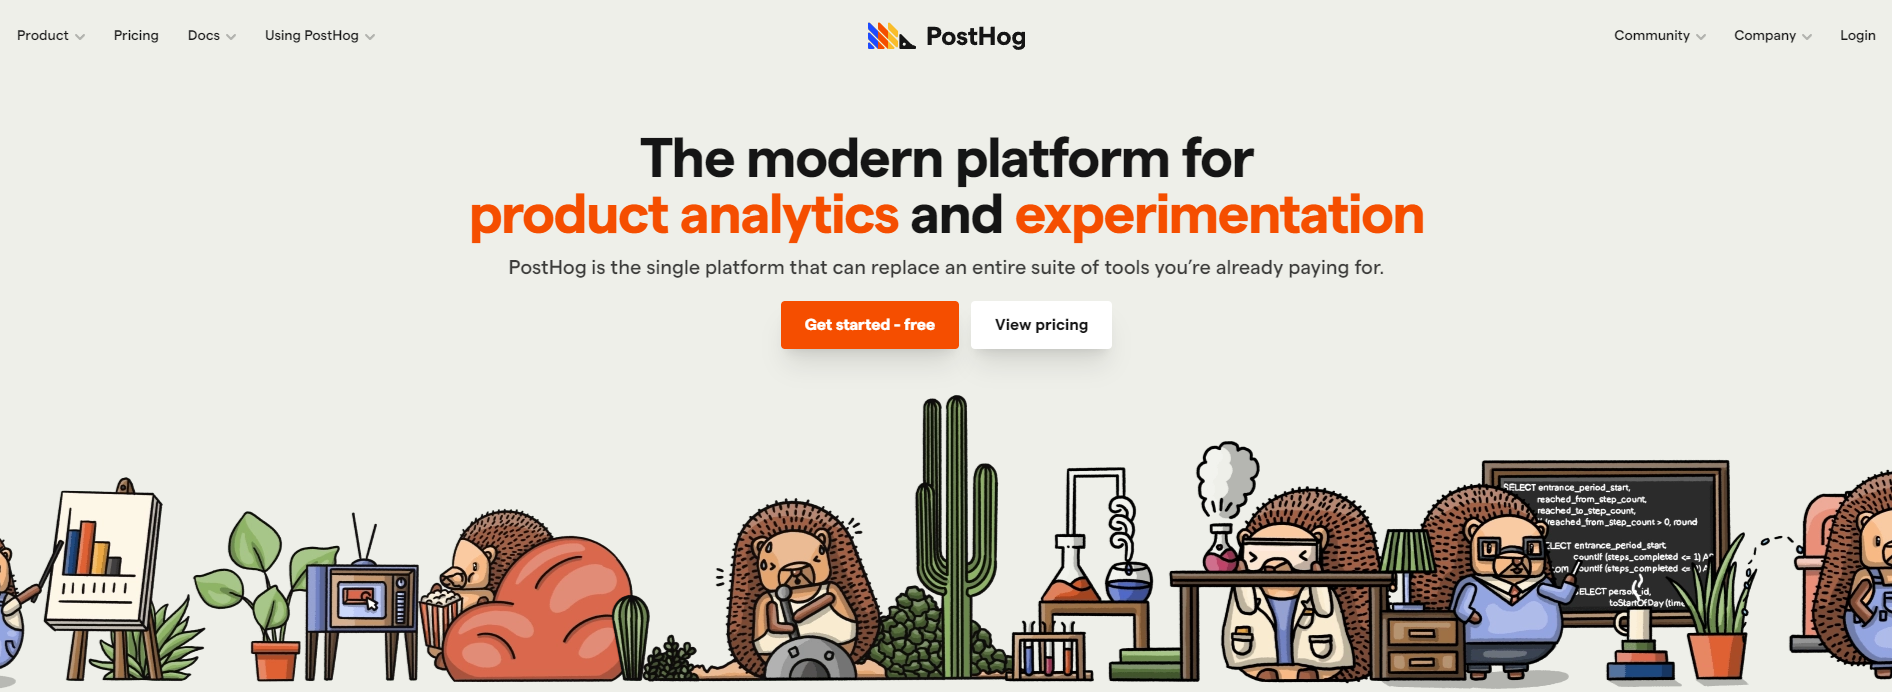 PostHog and Google Analytics comparison